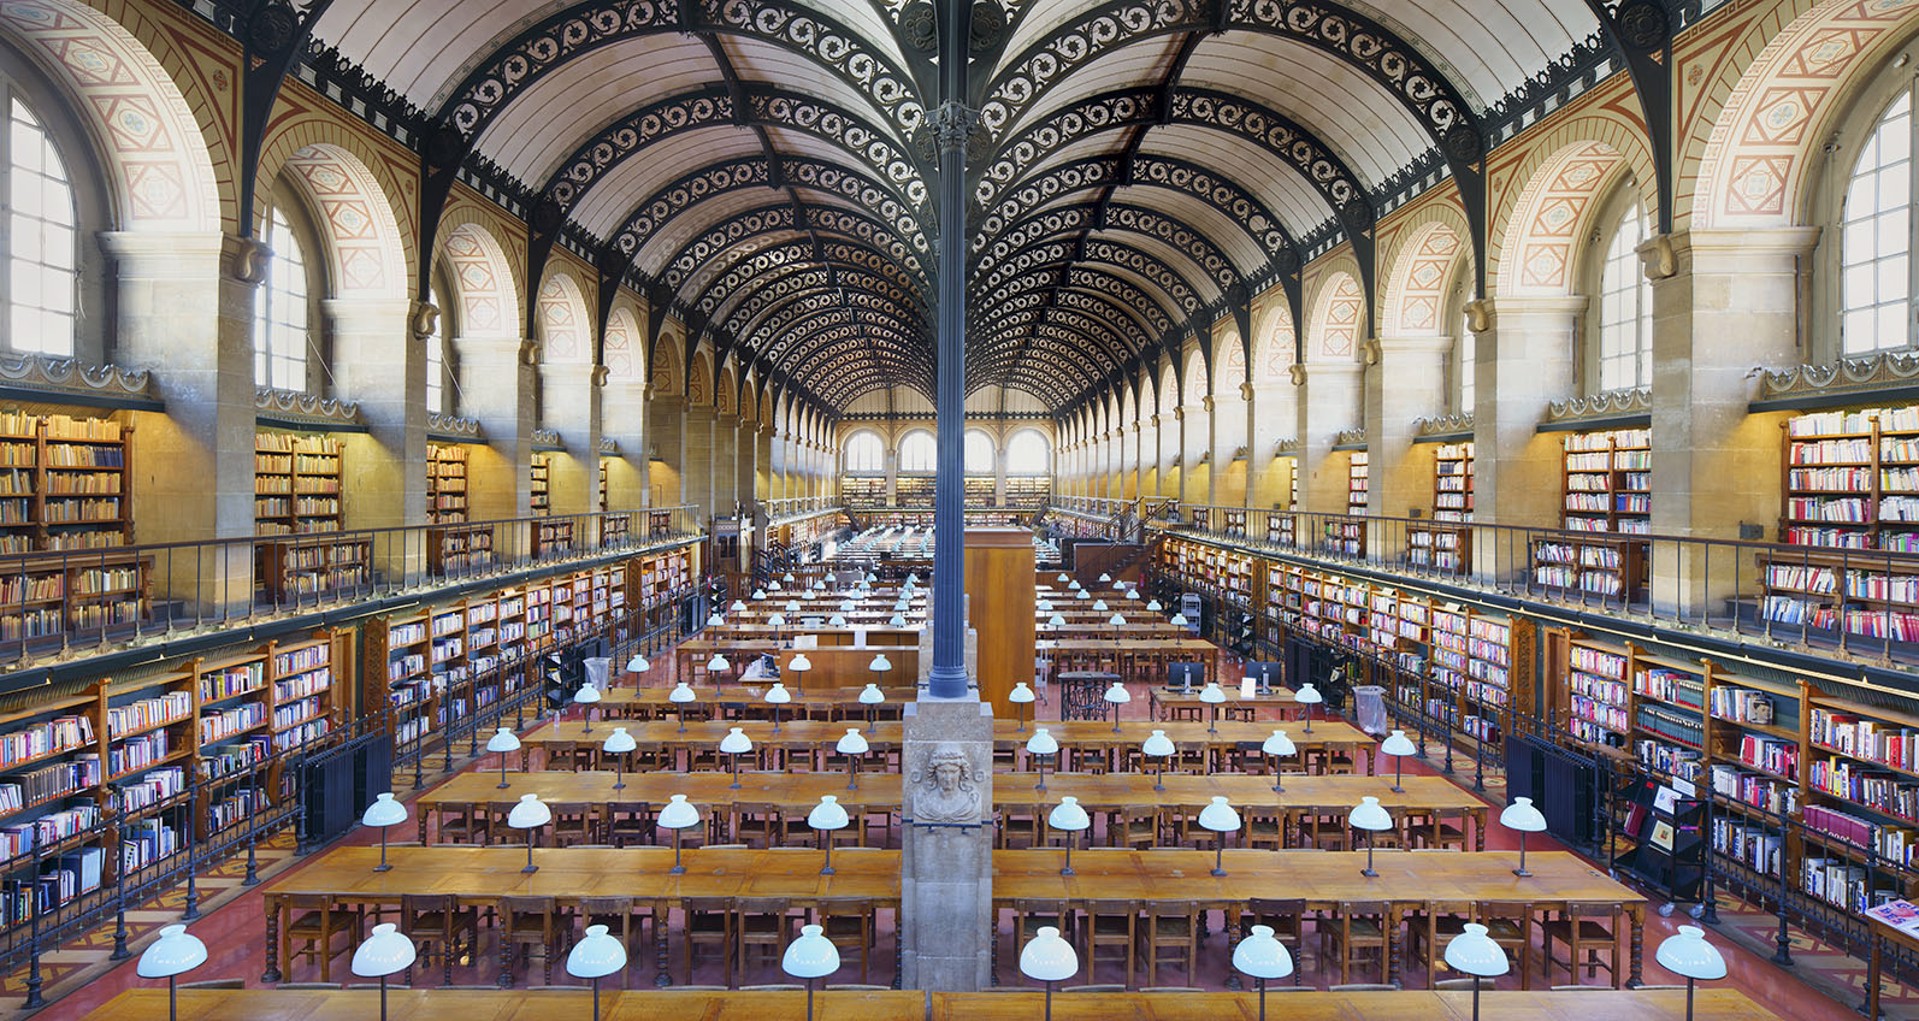 Sainte-Genevieve III Library, Paris by Reinhard Goerner